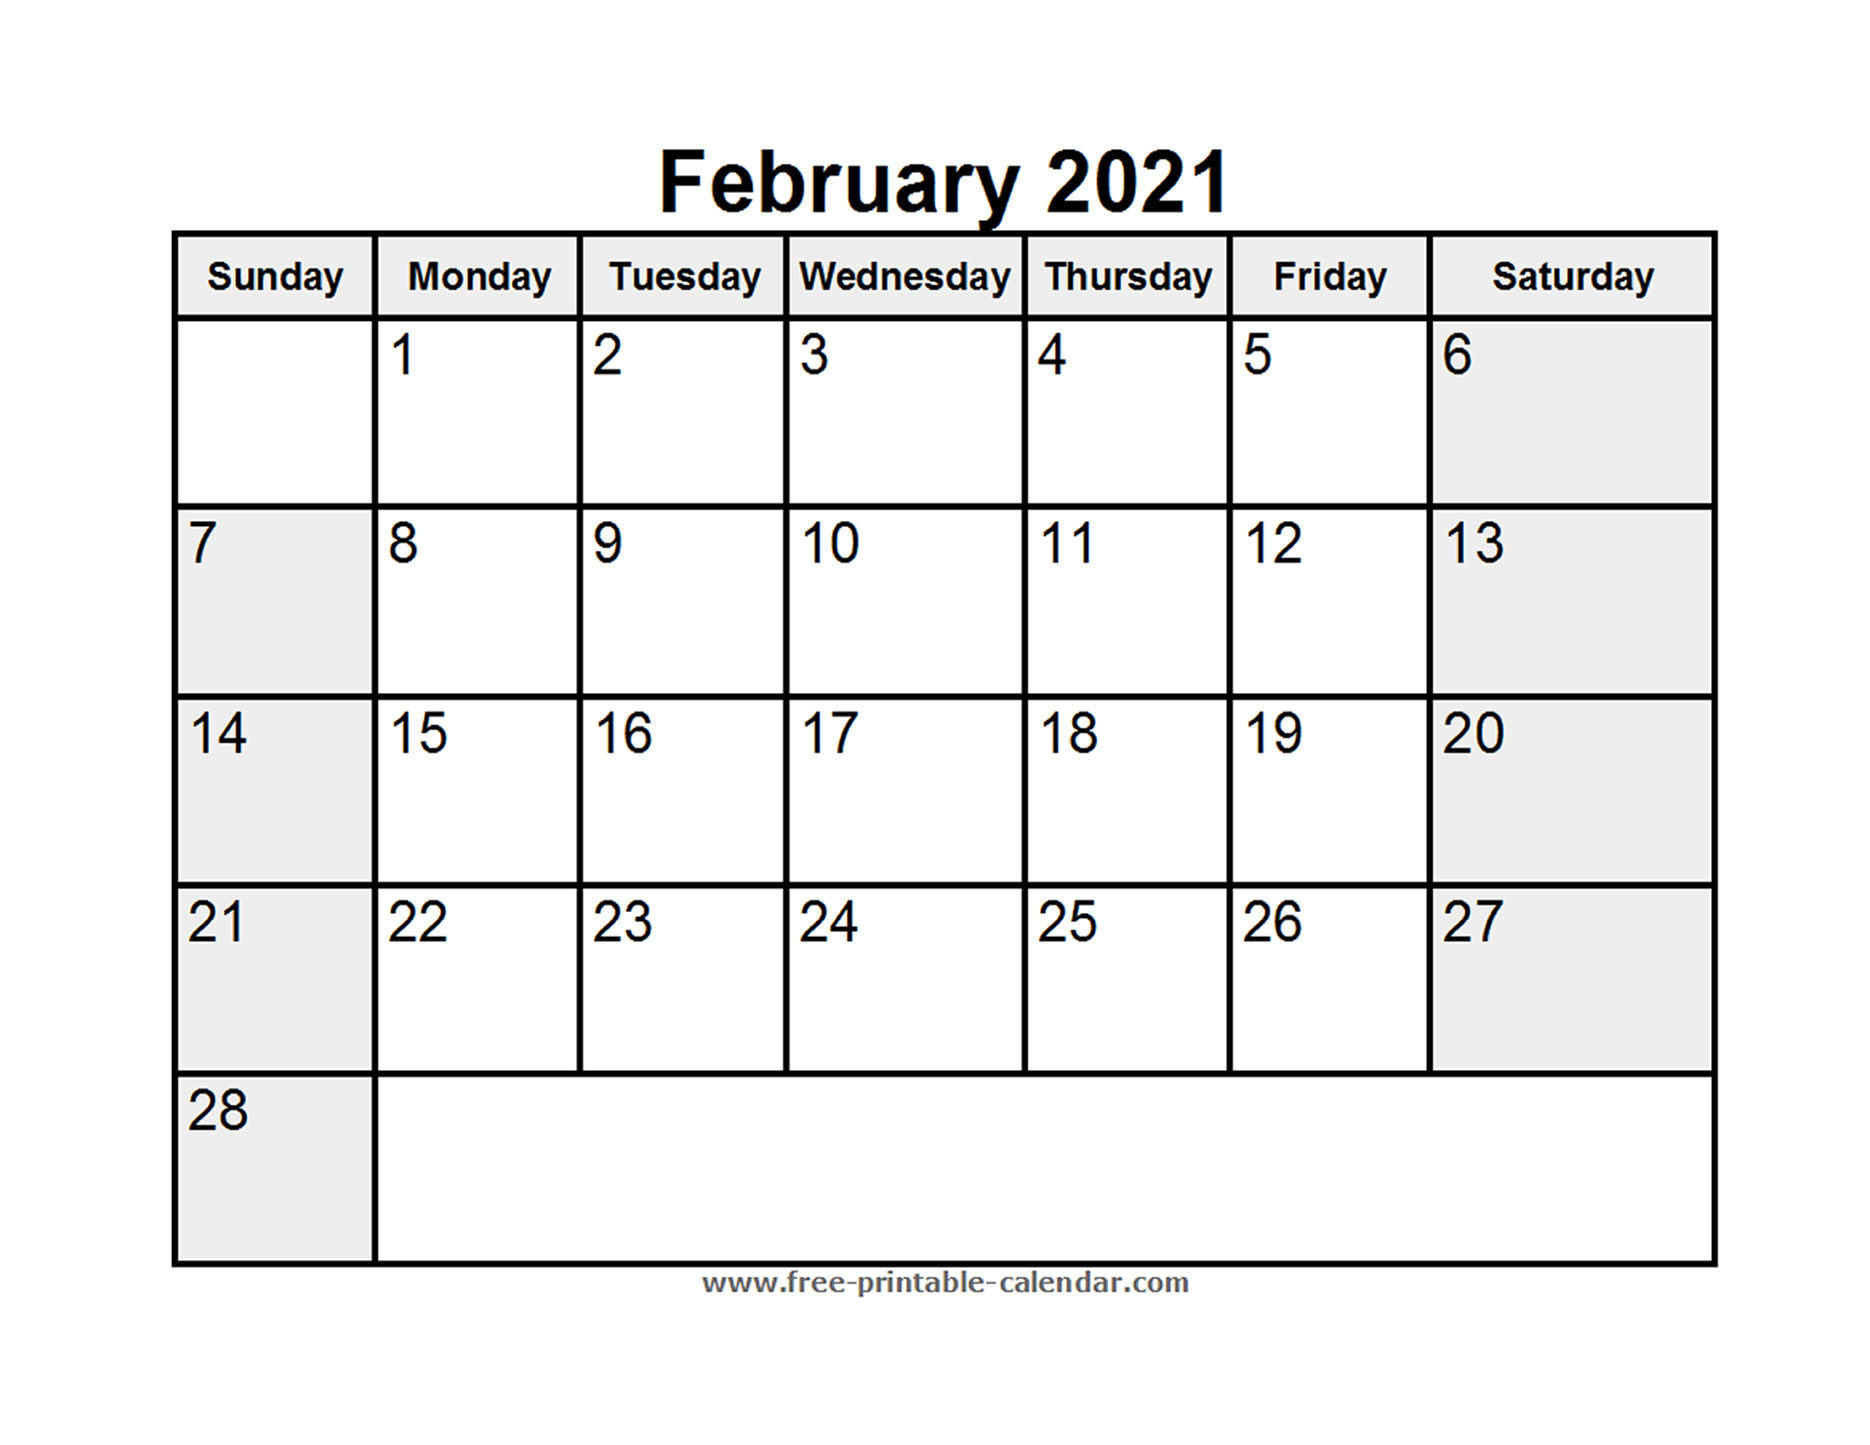 February 2021 Calendar Printable Free - Free Printable  Feb 2021 Calendar